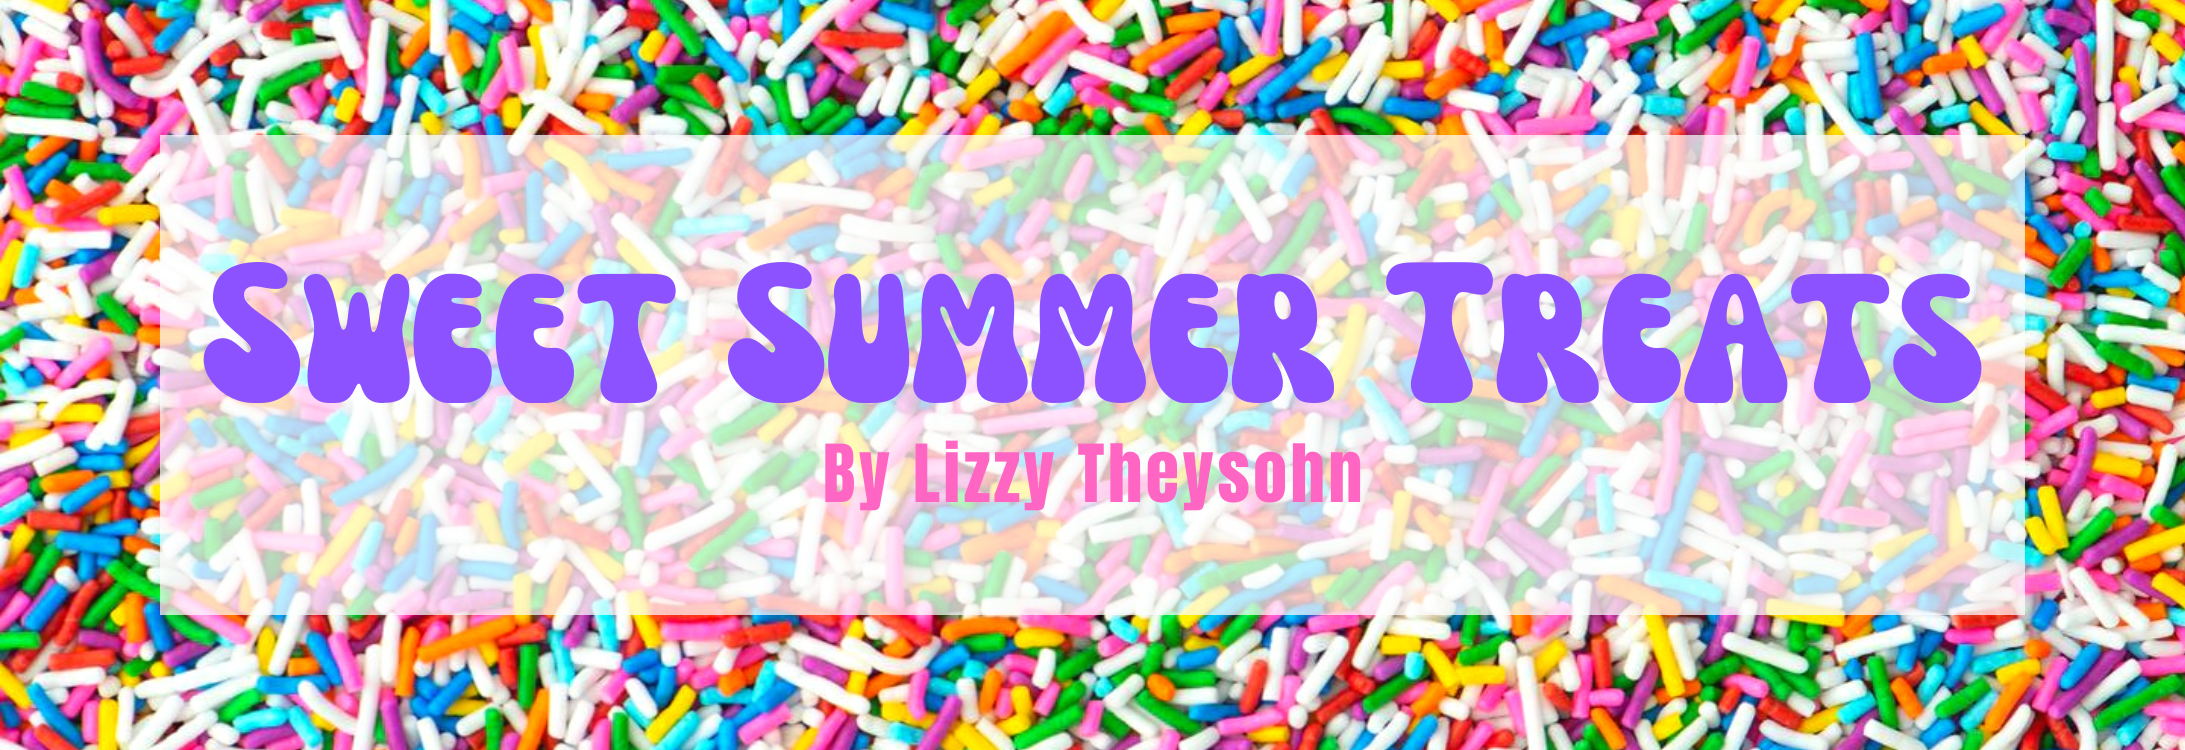 Sweet Summer Treats blog cover